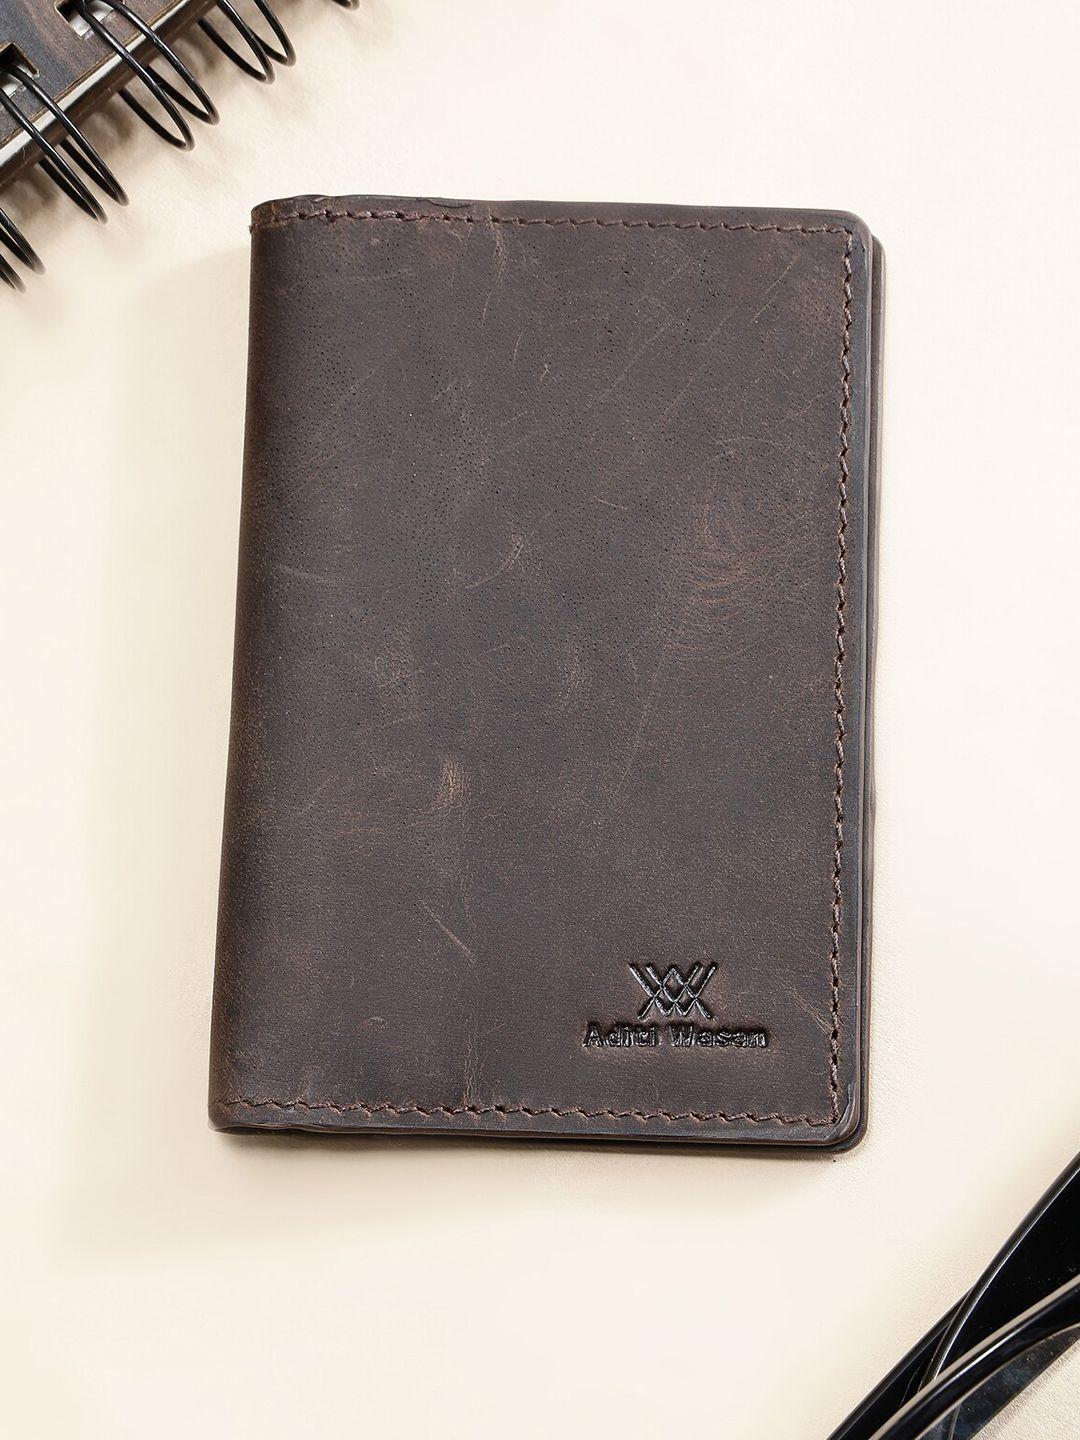 aditi wasan women brown leather two fold wallet